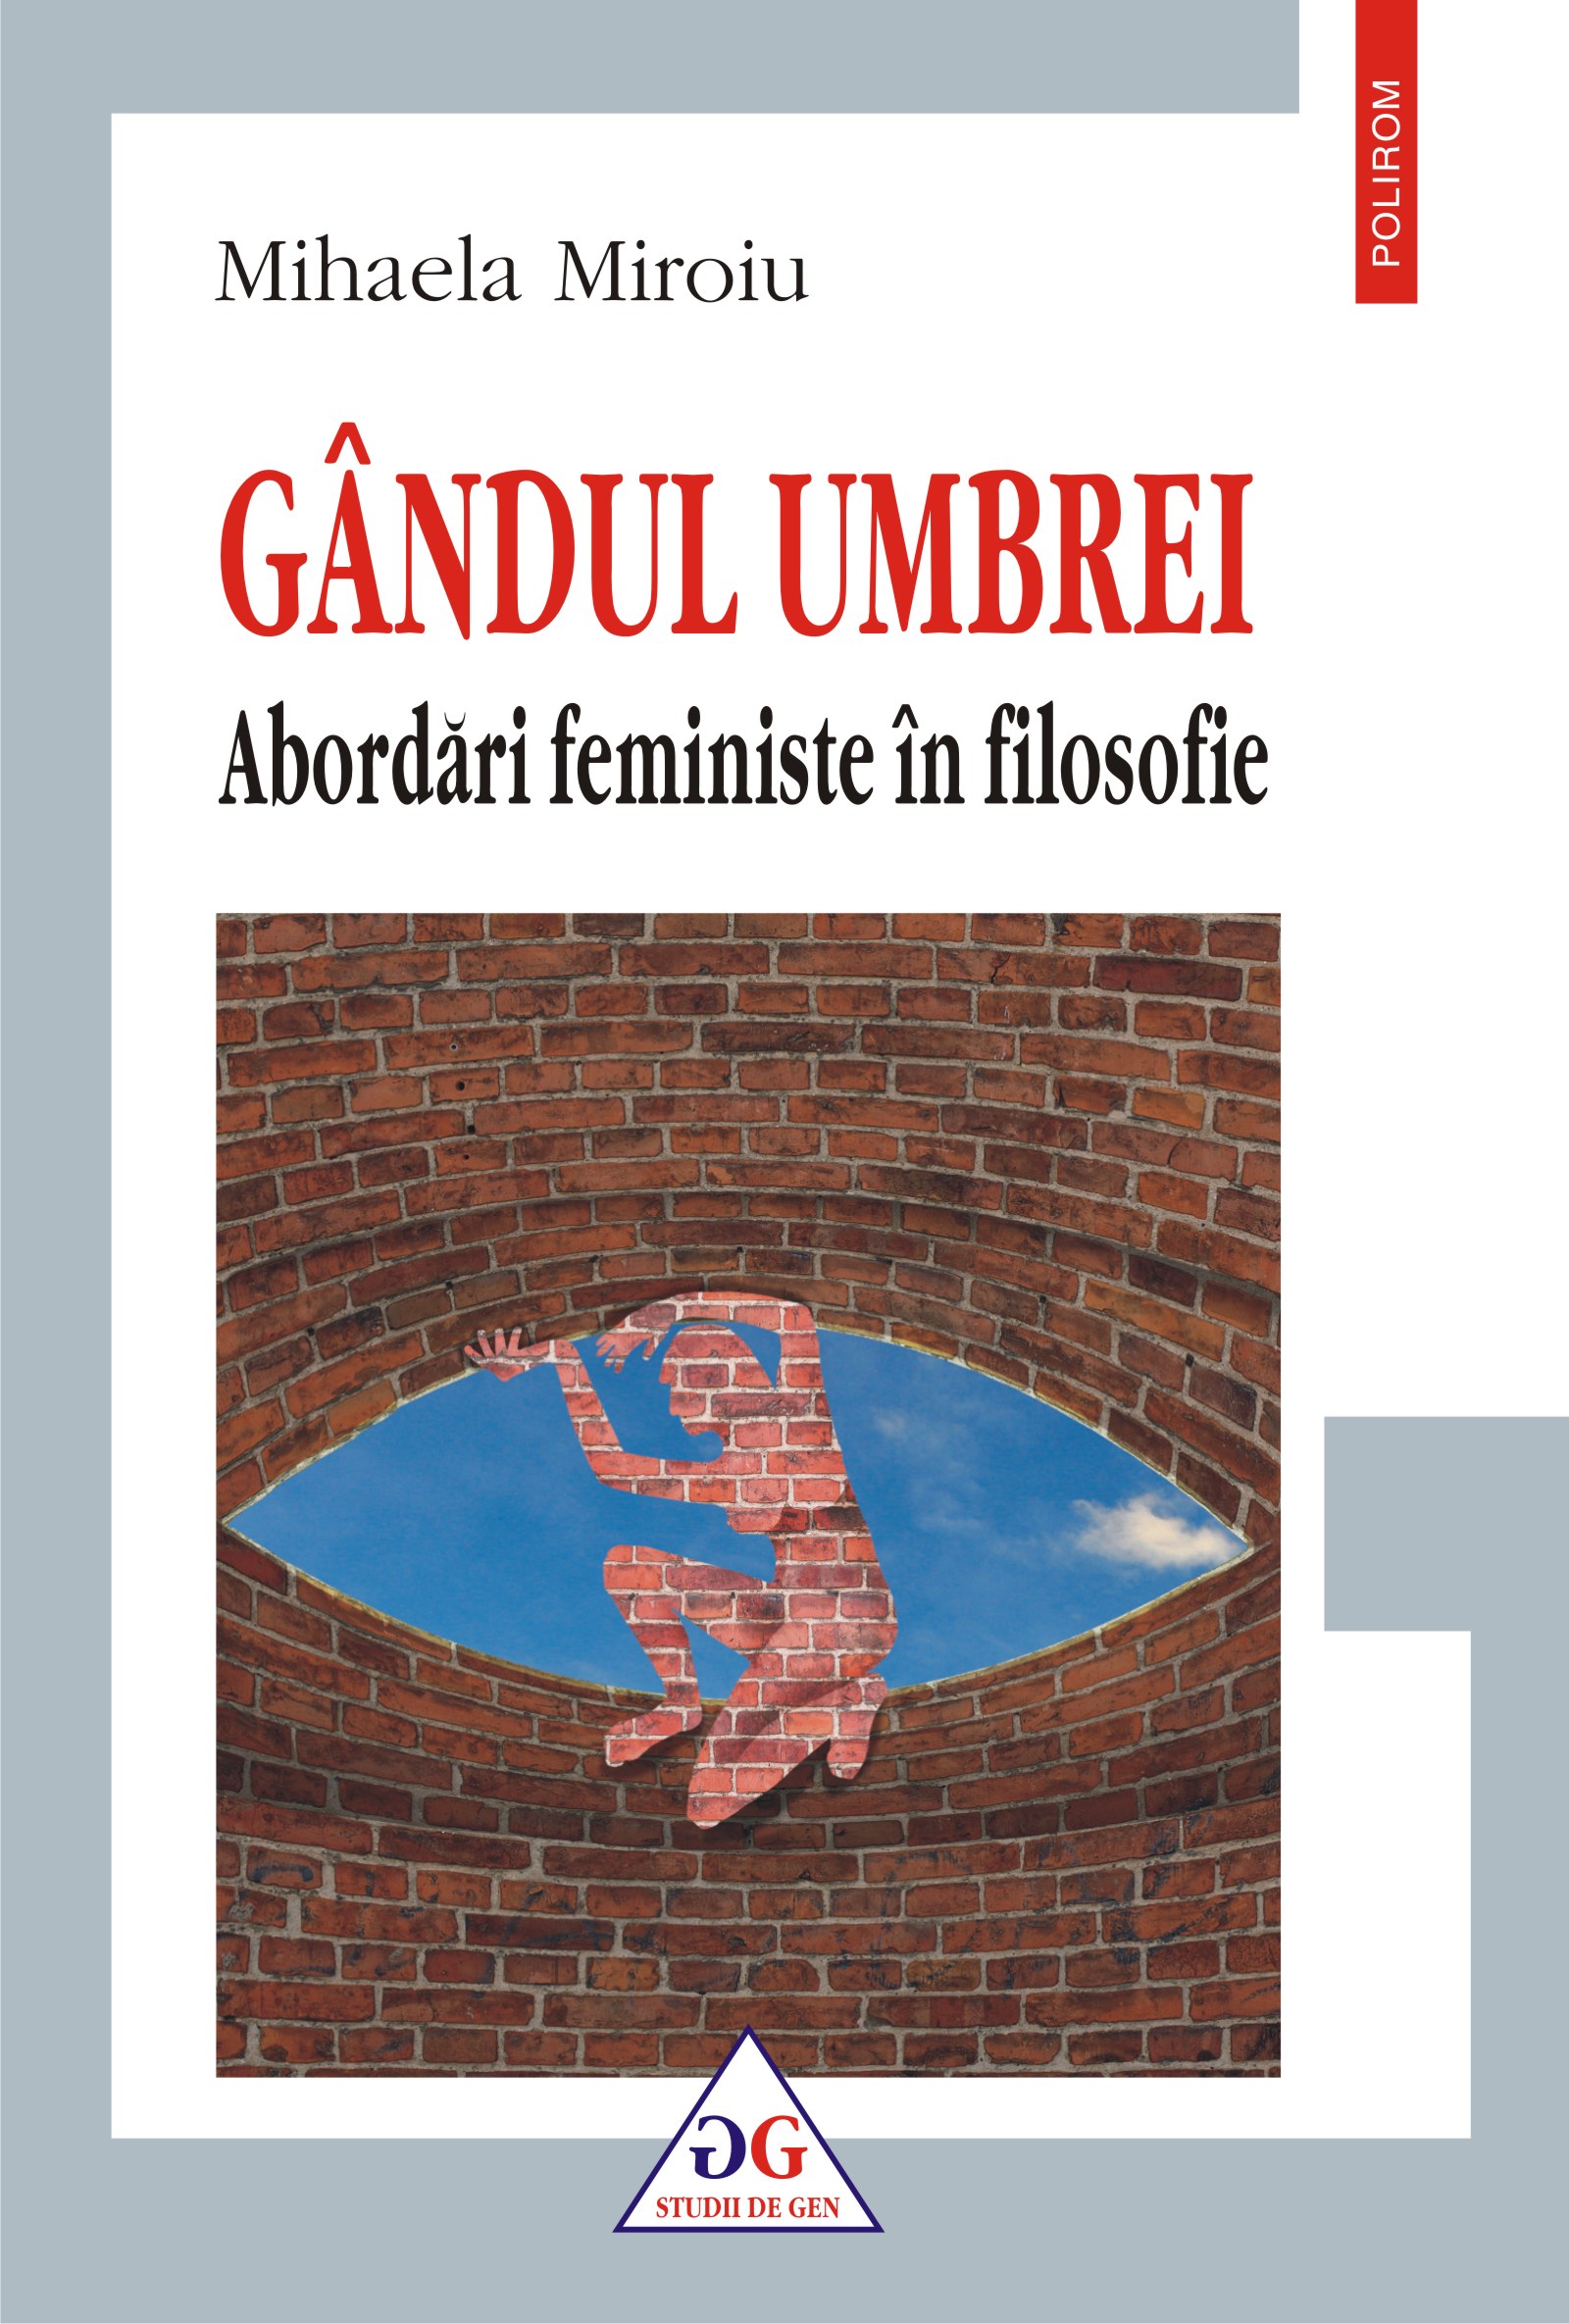 eBook Gandul umbrei. Abordari feministe in filosofie - Mihaela Miroiu